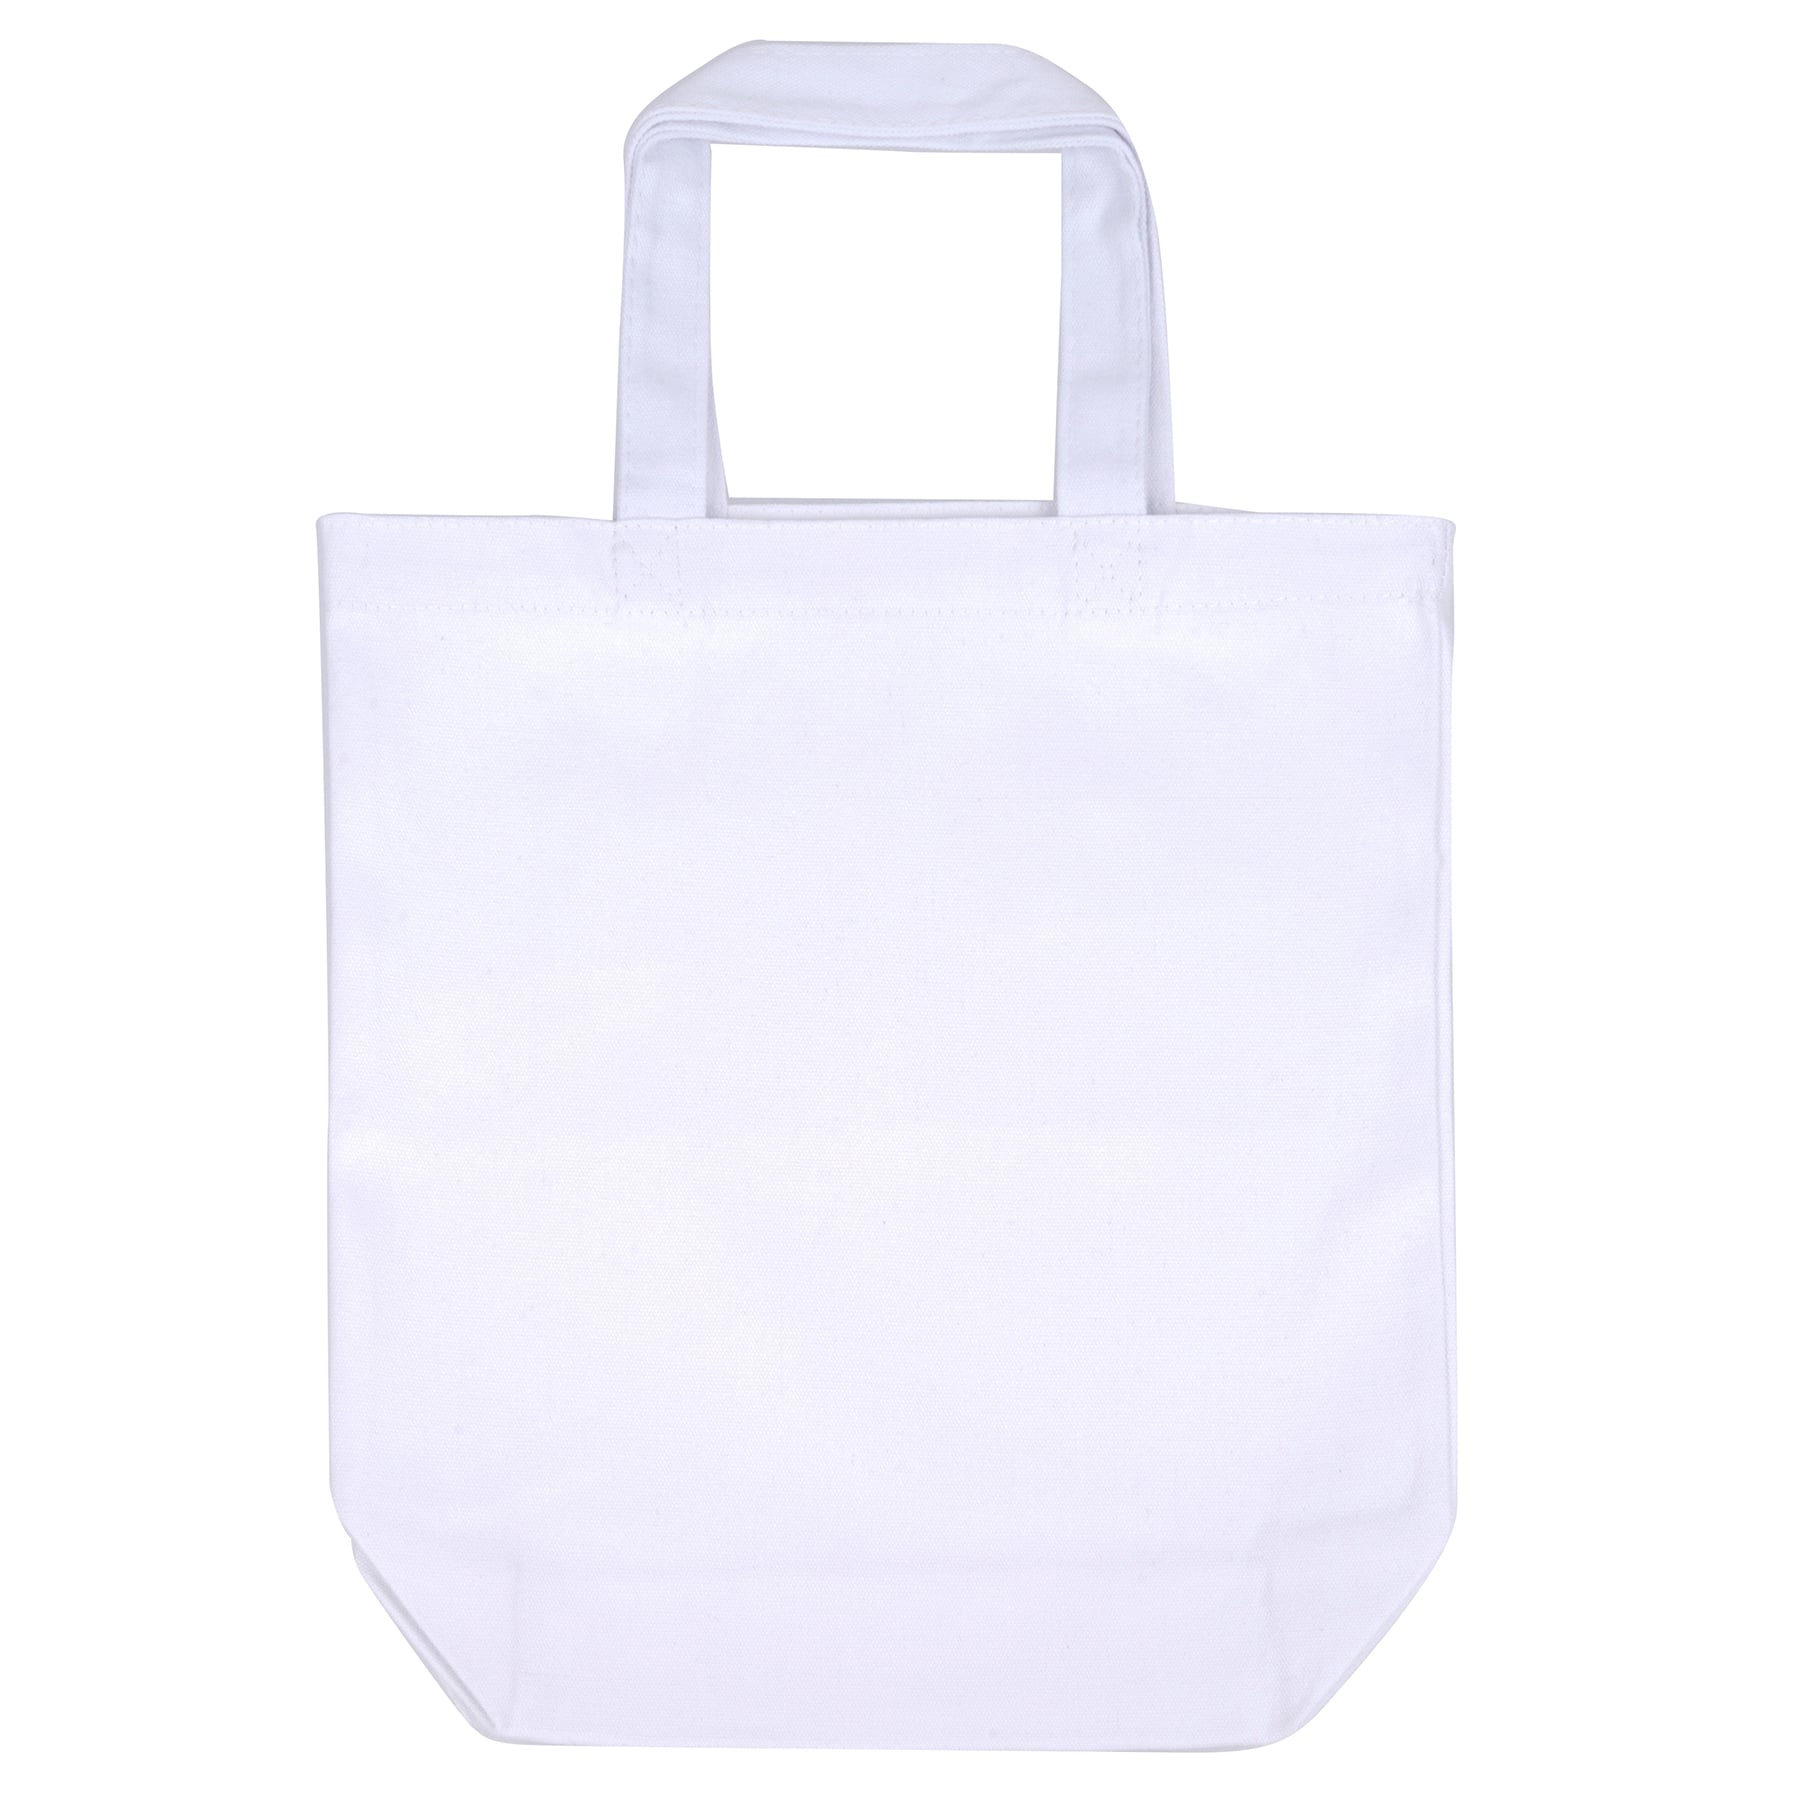 white canvas bag